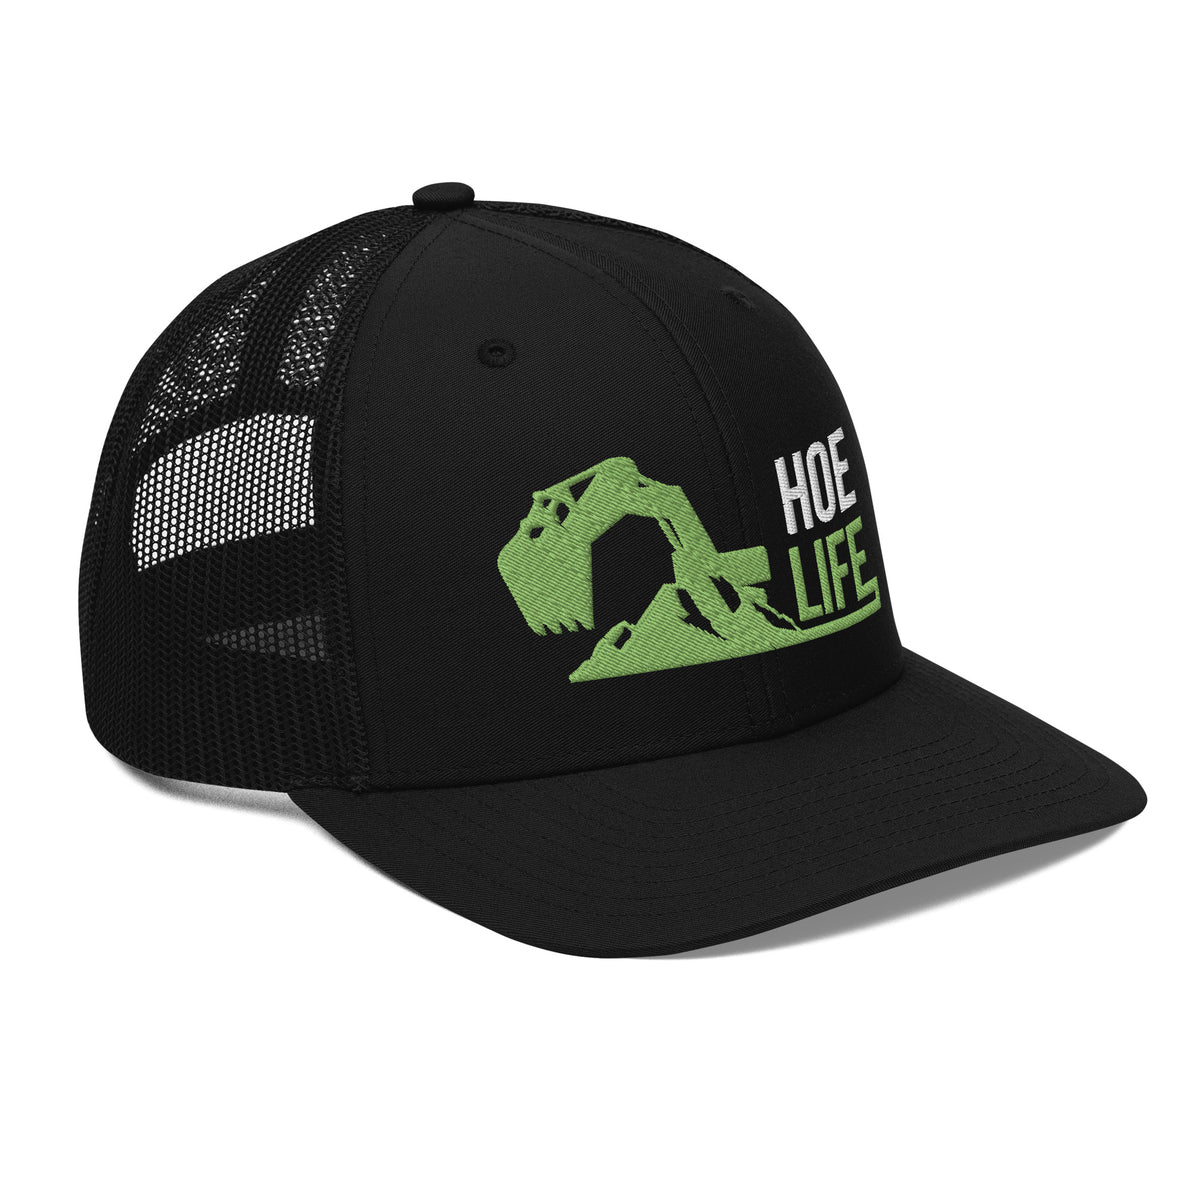 Hoe Life - Excavator - Snapback Hat - Free Shipping